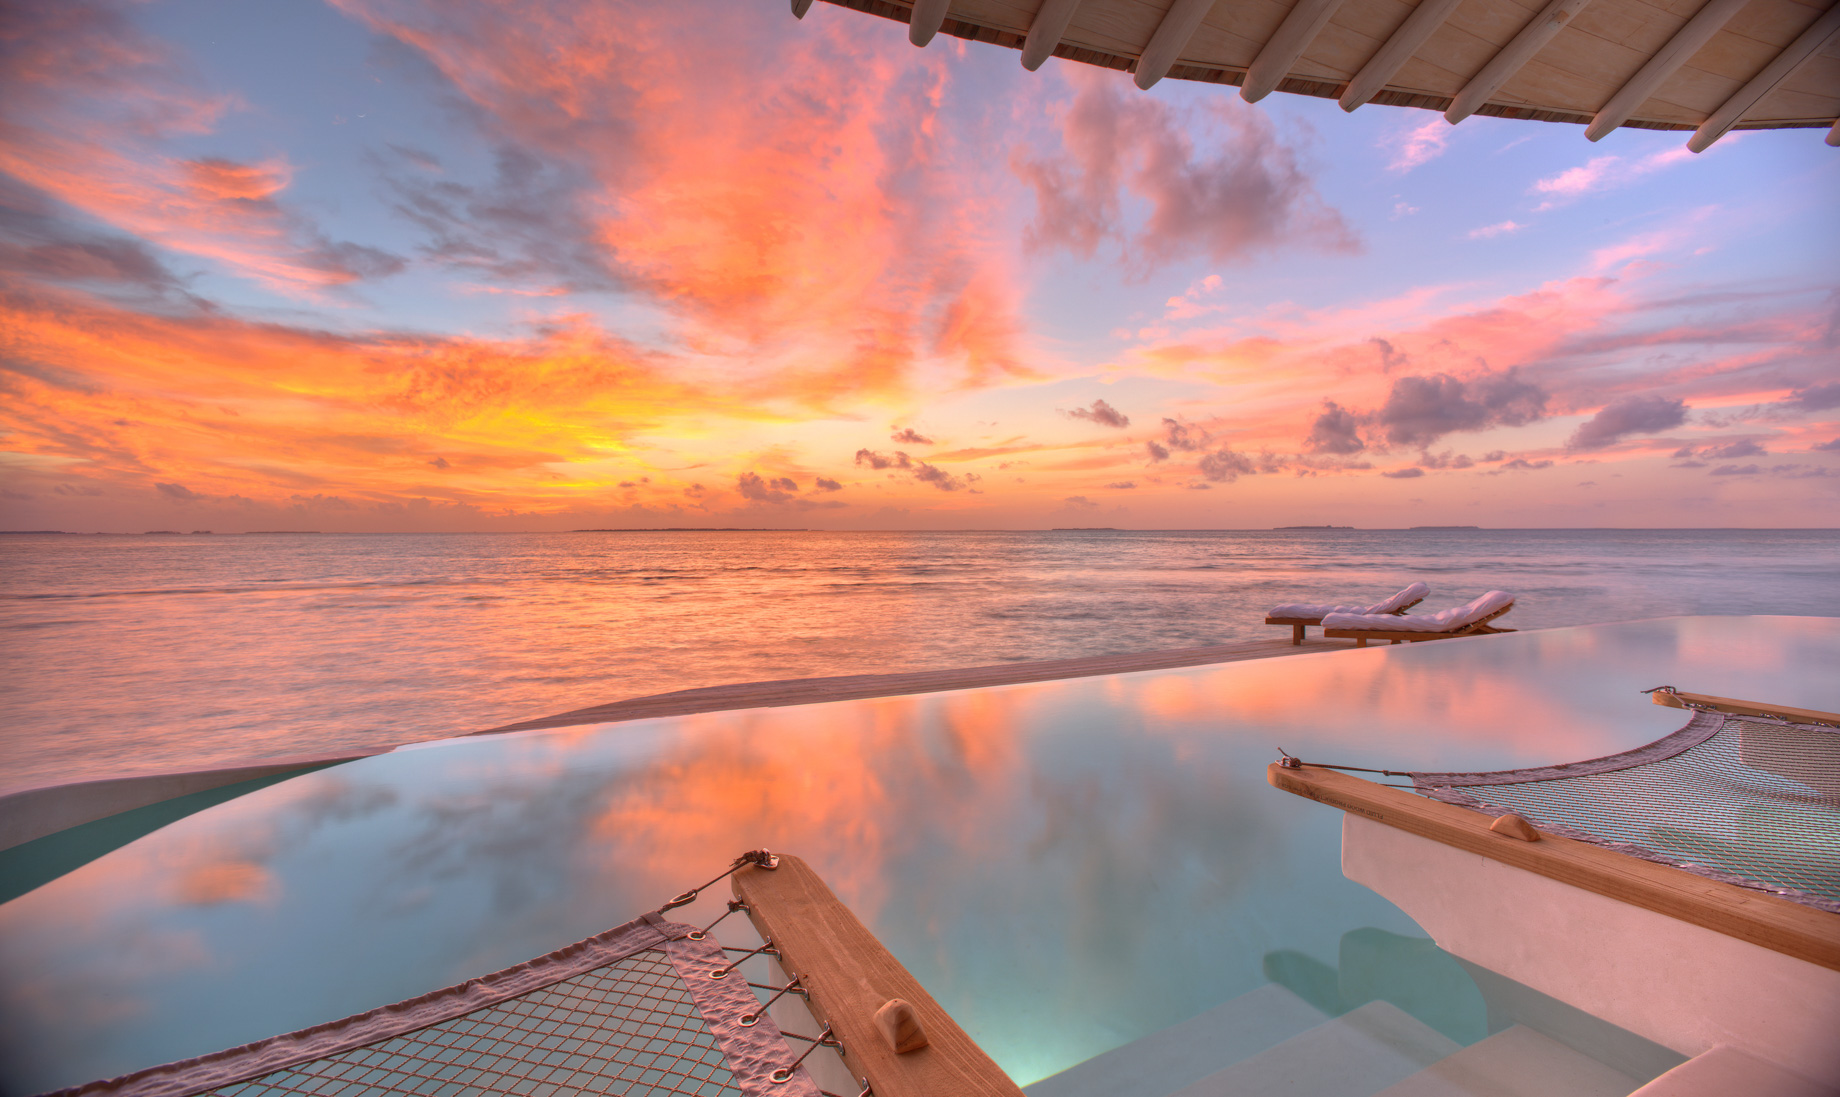 Soneva Jani Resort – Noonu Atoll, Medhufaru, Maldives – Overwater Villa Infinity Pool Sunset Oceanview